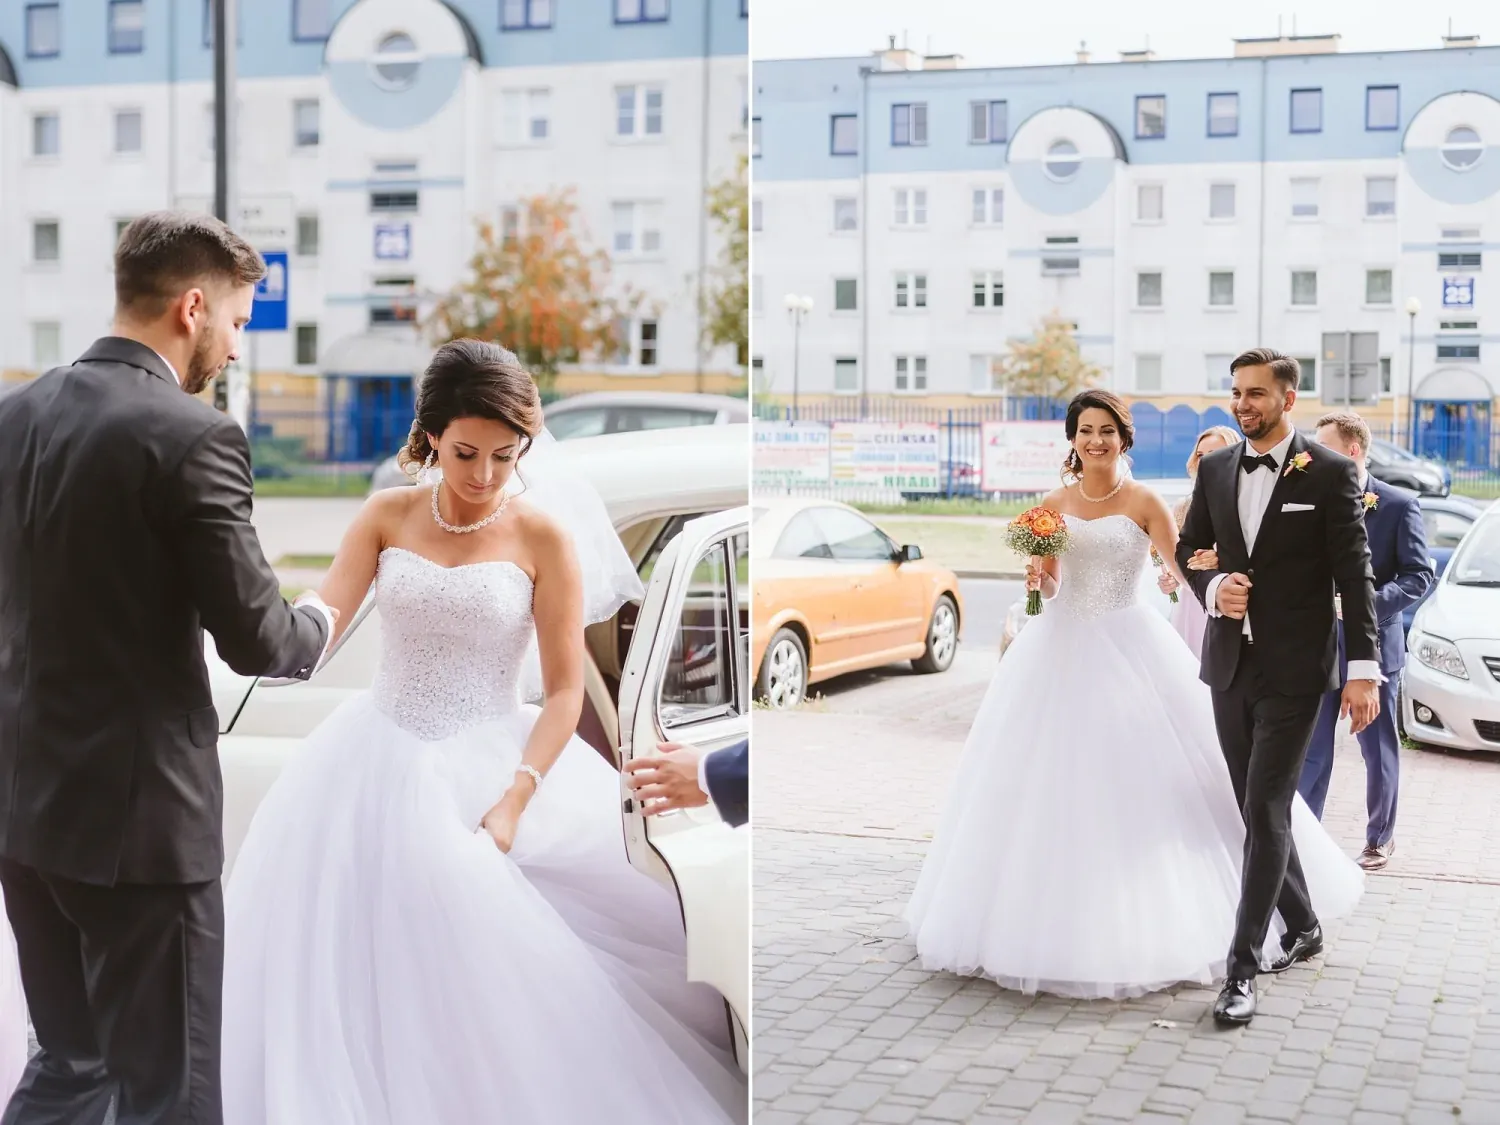 kingajakub_wedding_8.webp - Kinga & Jakub- Monika Chmielewska - wedding, portaits, family photography - Munich